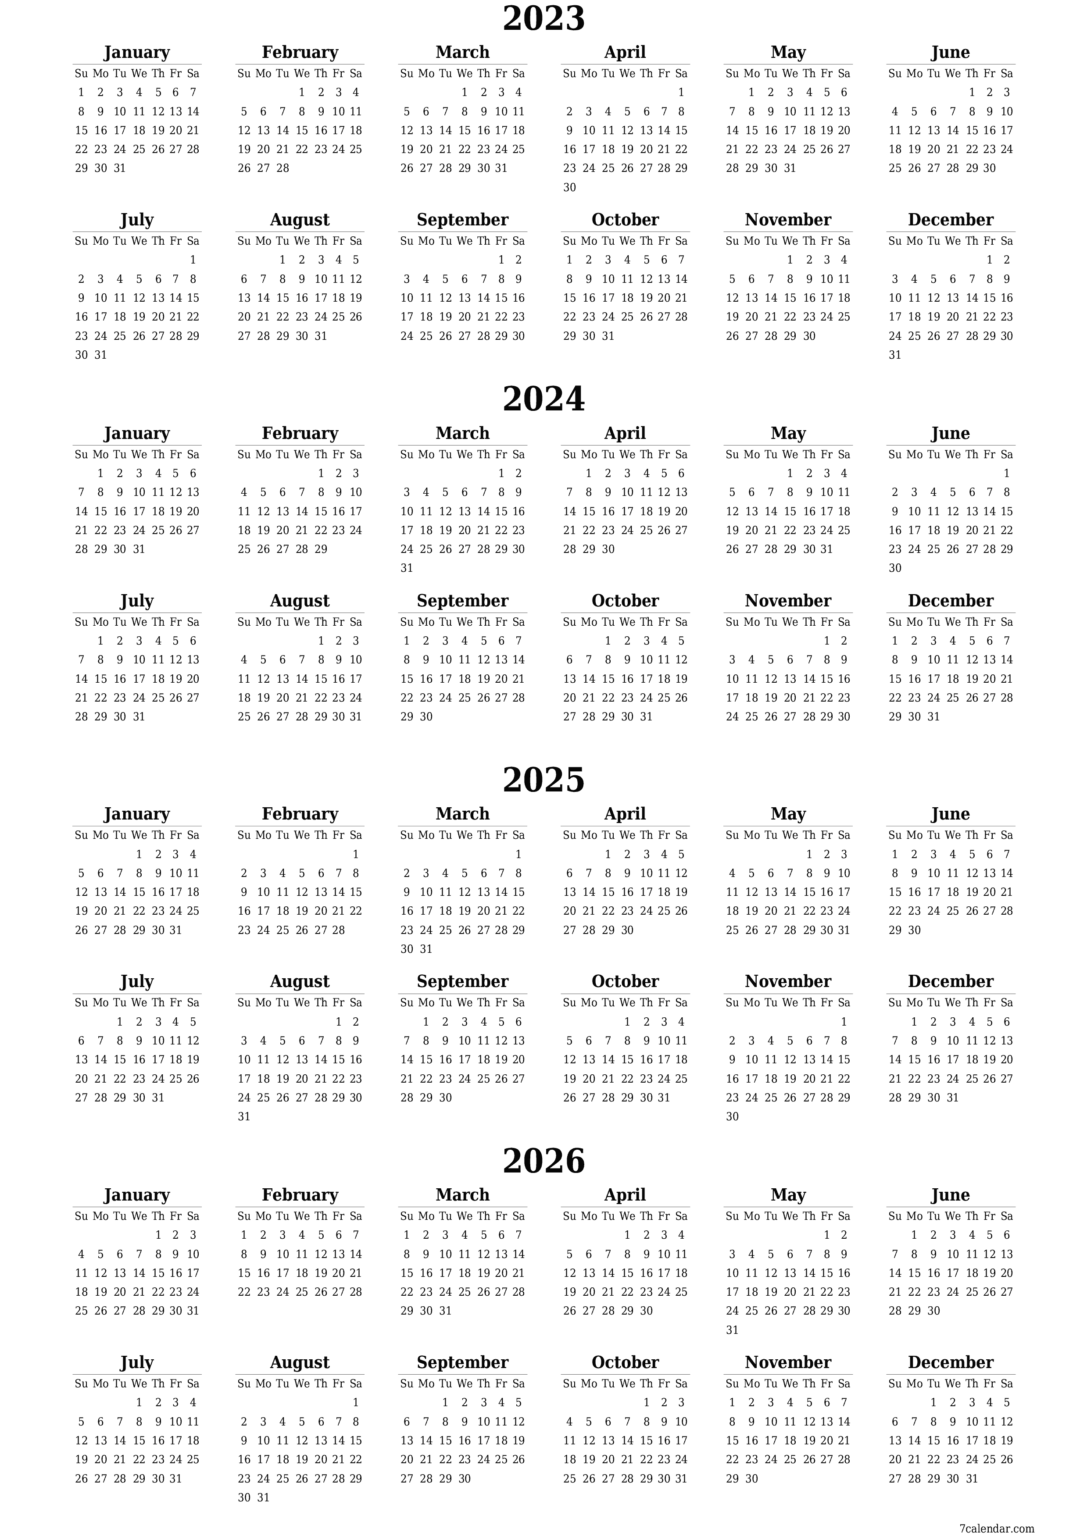 Free Printable Three-Year Calendars Templates 2023/2024/2025